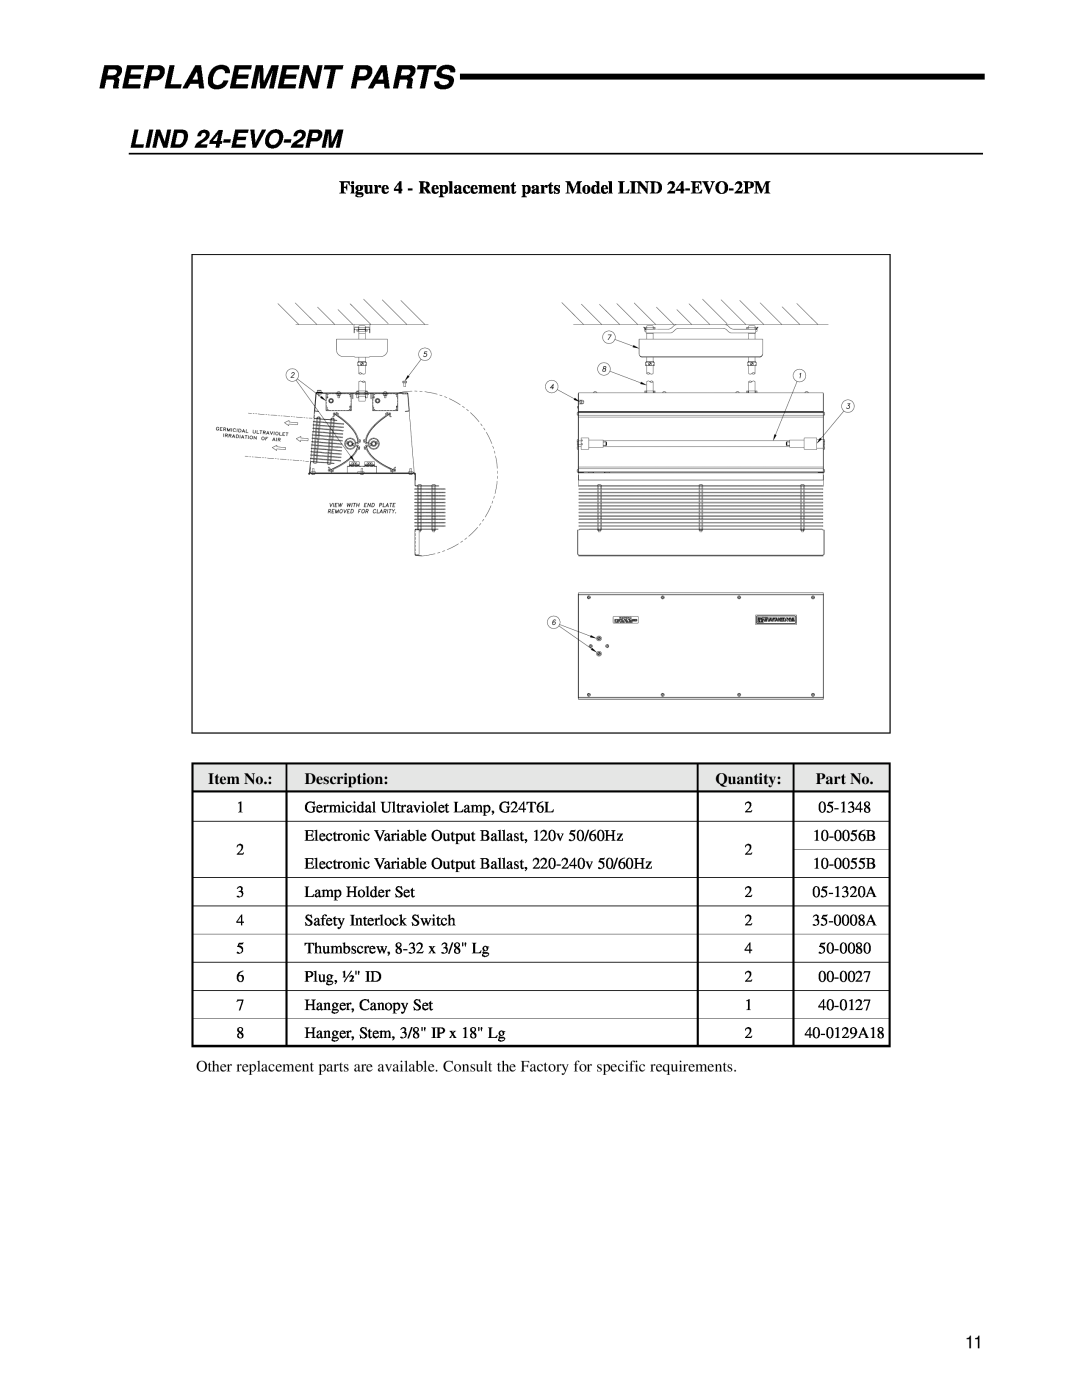 UltraViolet Devices Air Disinfection manual LIND 24-EVO-2PM, Replacement Parts, Item No, Description, Quantity 